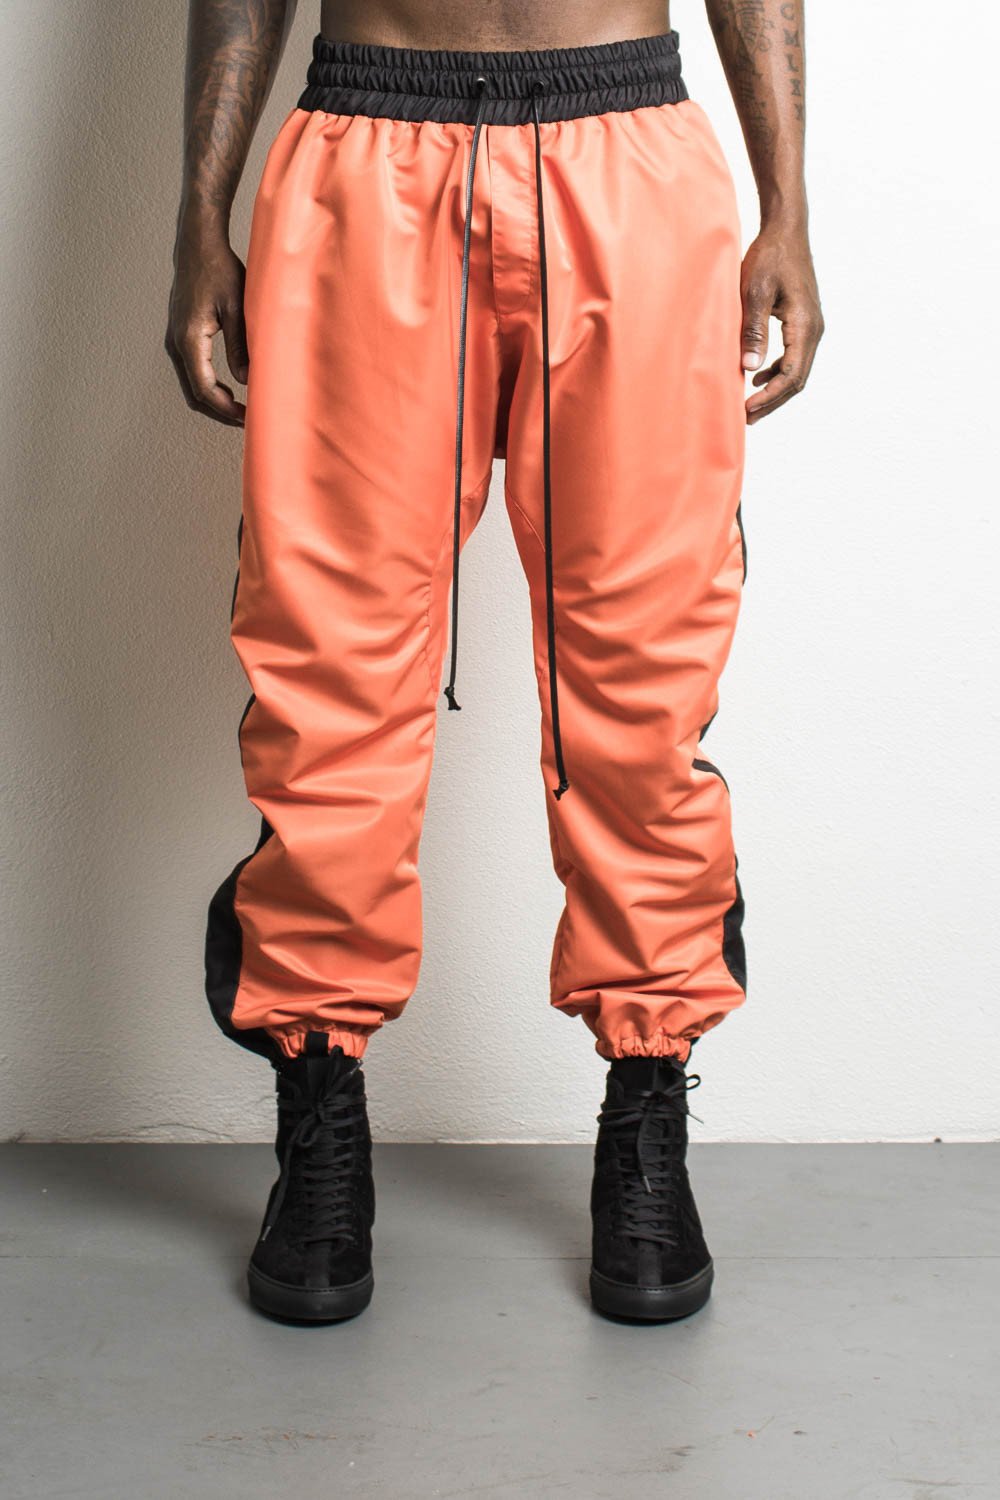 parachute pants orange/black oxipueu